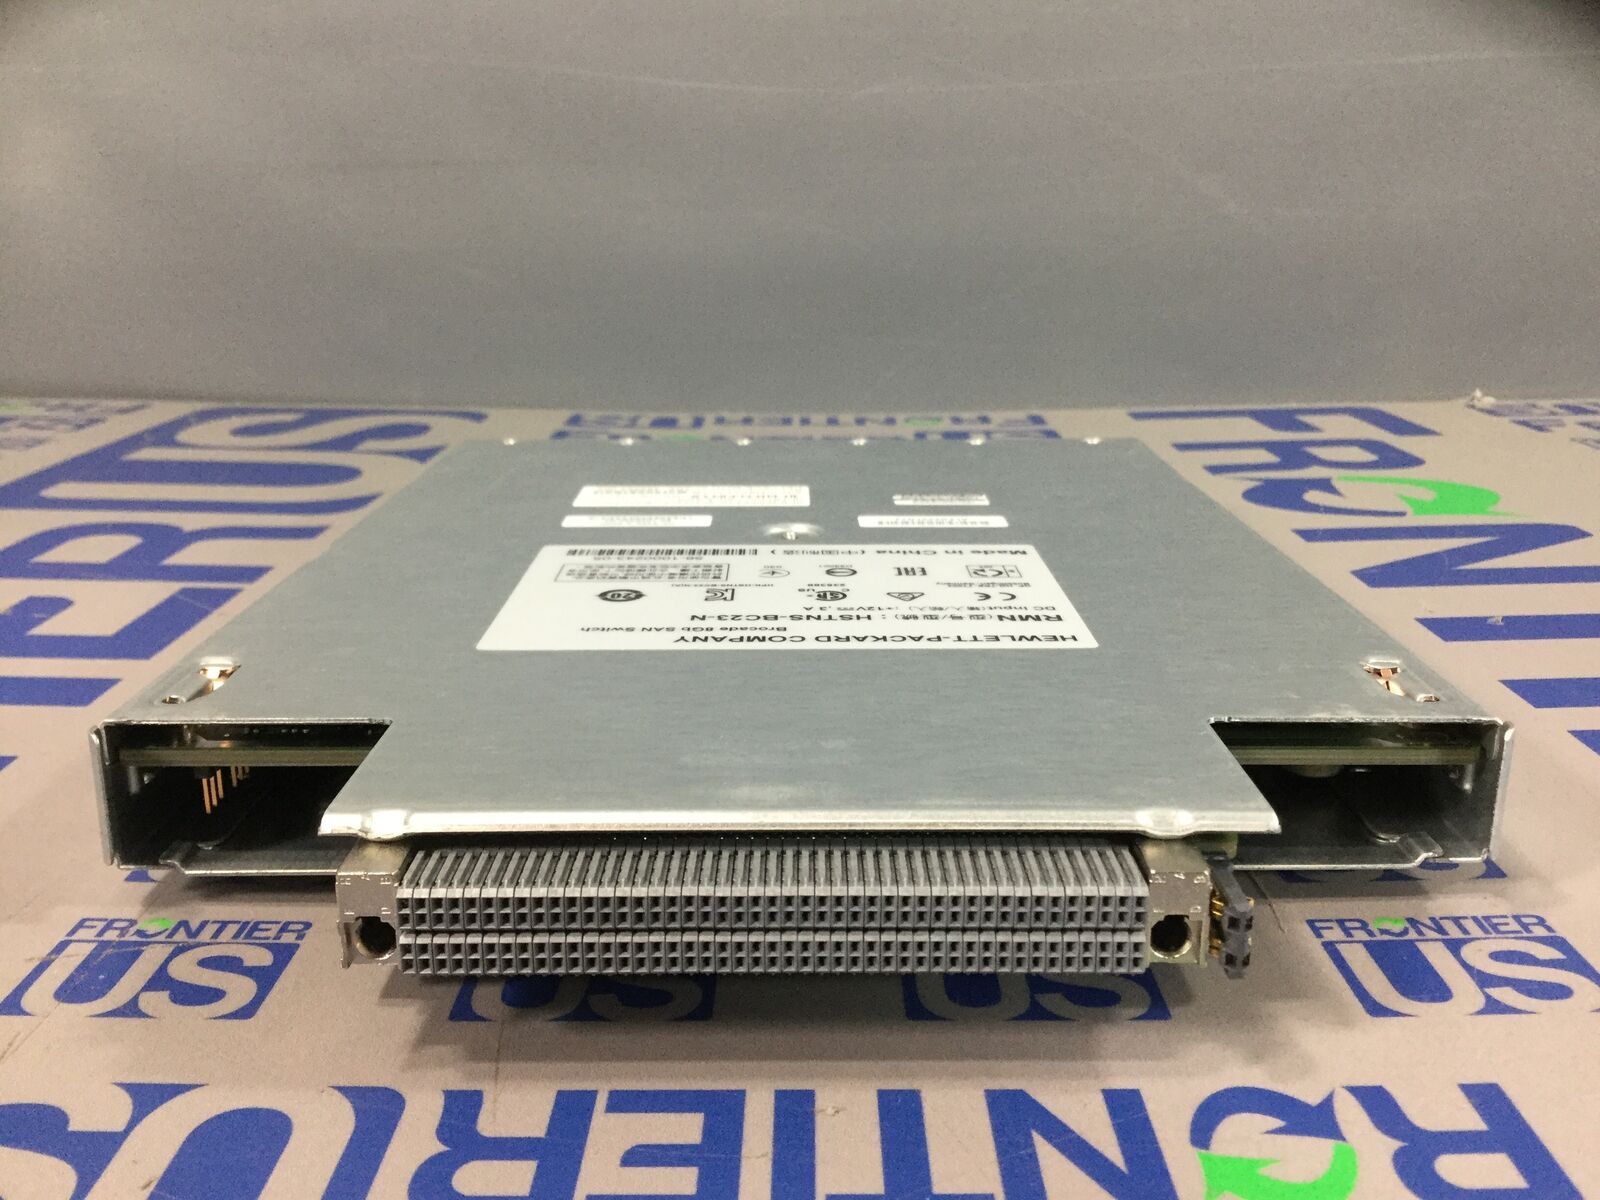 HPE 489864-002 Brocade 8/12c Storage Area Network (SAN) Switch